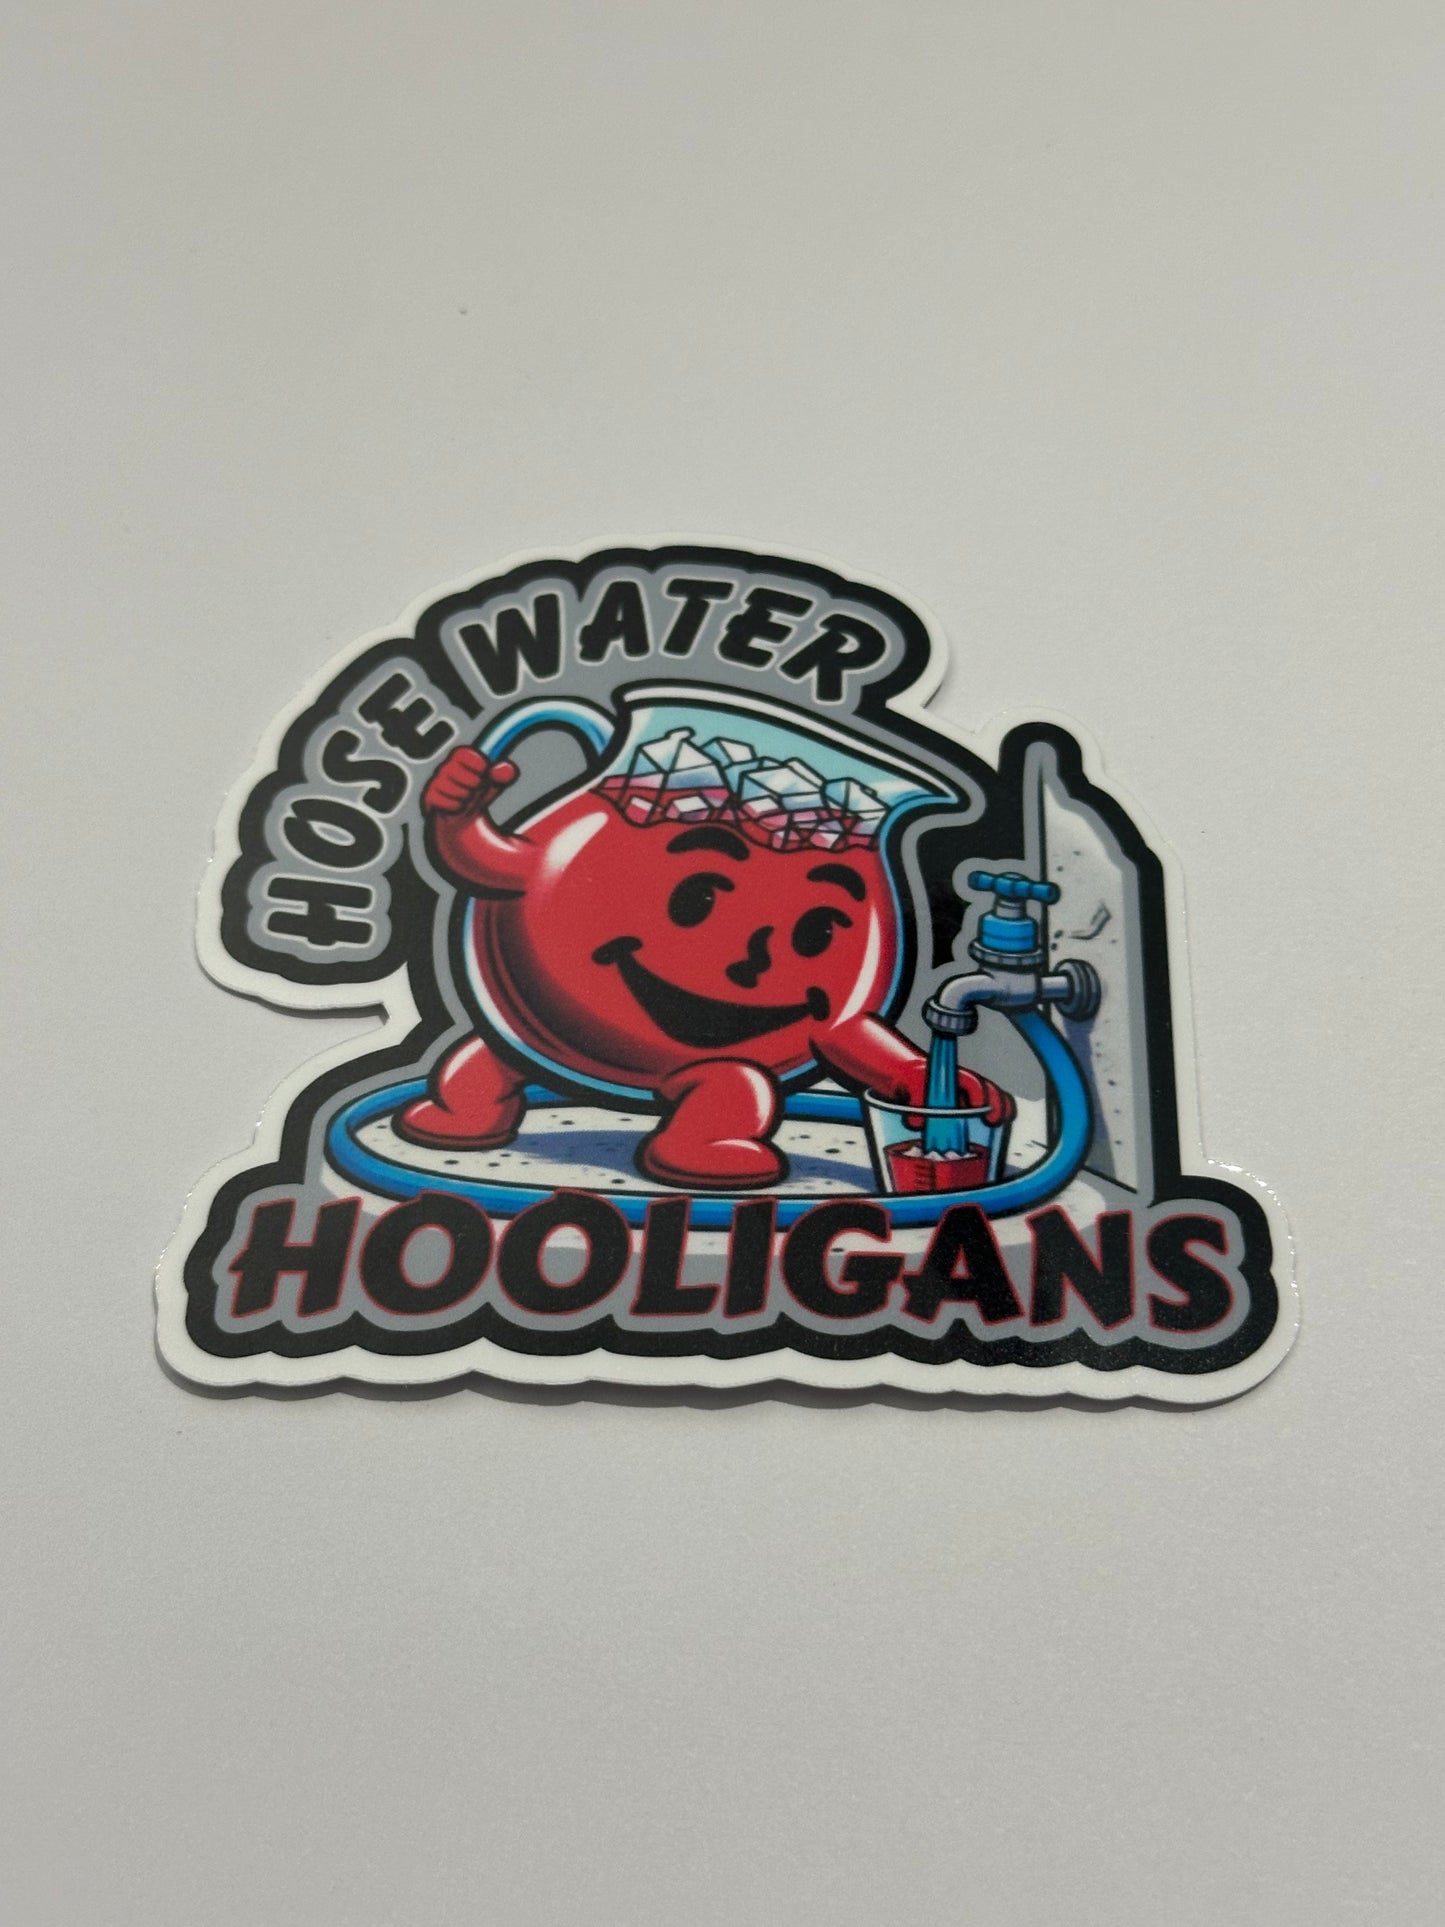 Hose Water Hooligan 3.3"x3" inch Vinyl DECAL Sticker # 83